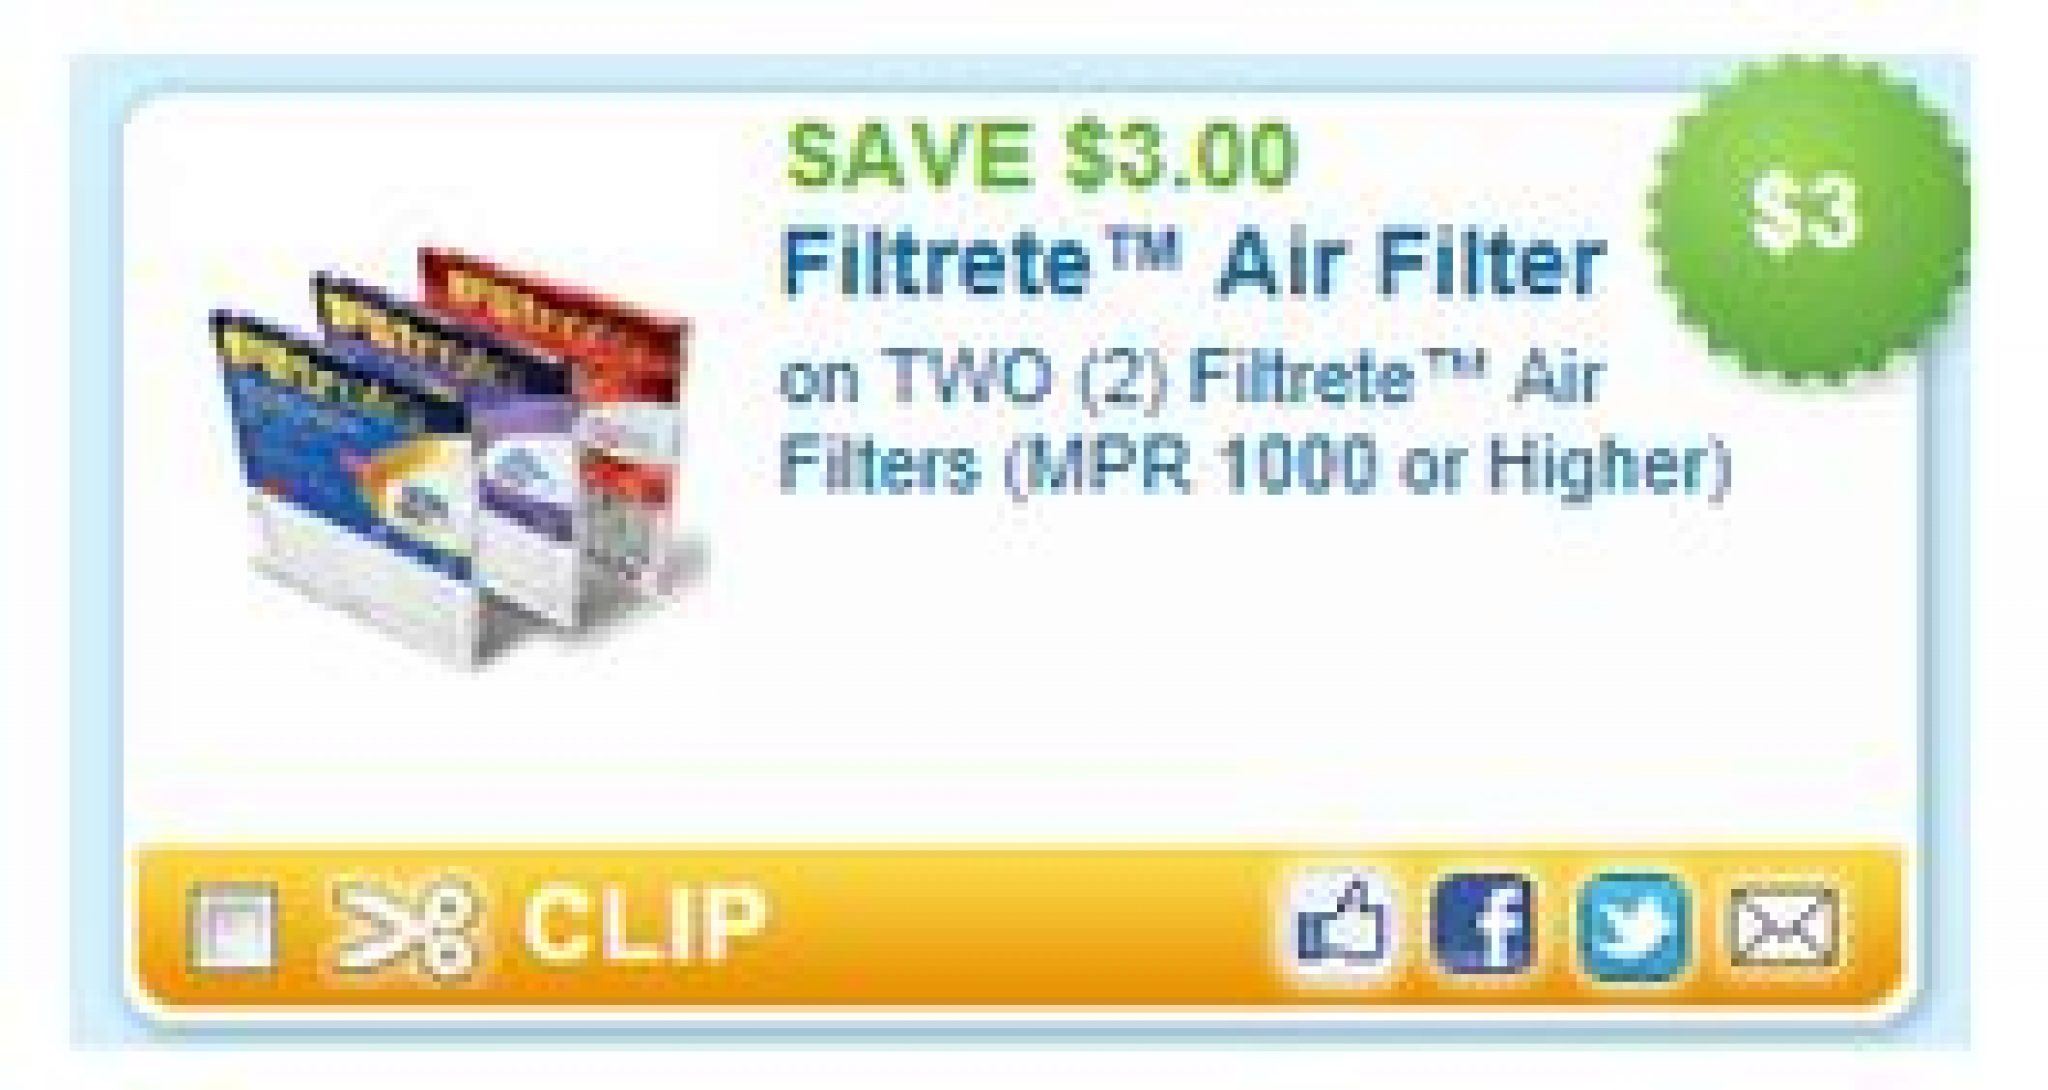 rare-3-off-3m-filtrete-air-filter-coupon